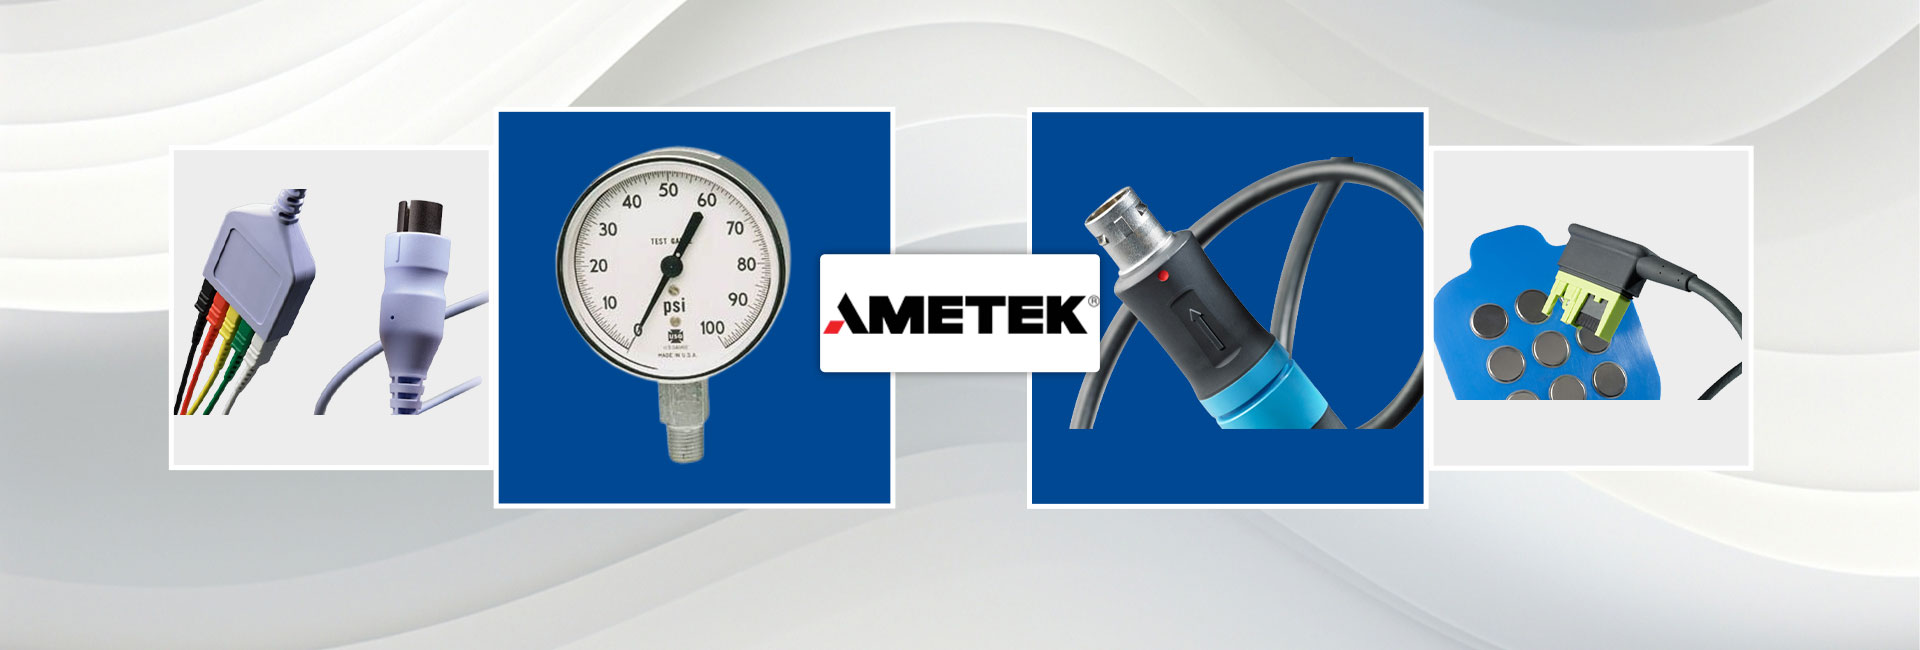 AMETEK Company Products Banner